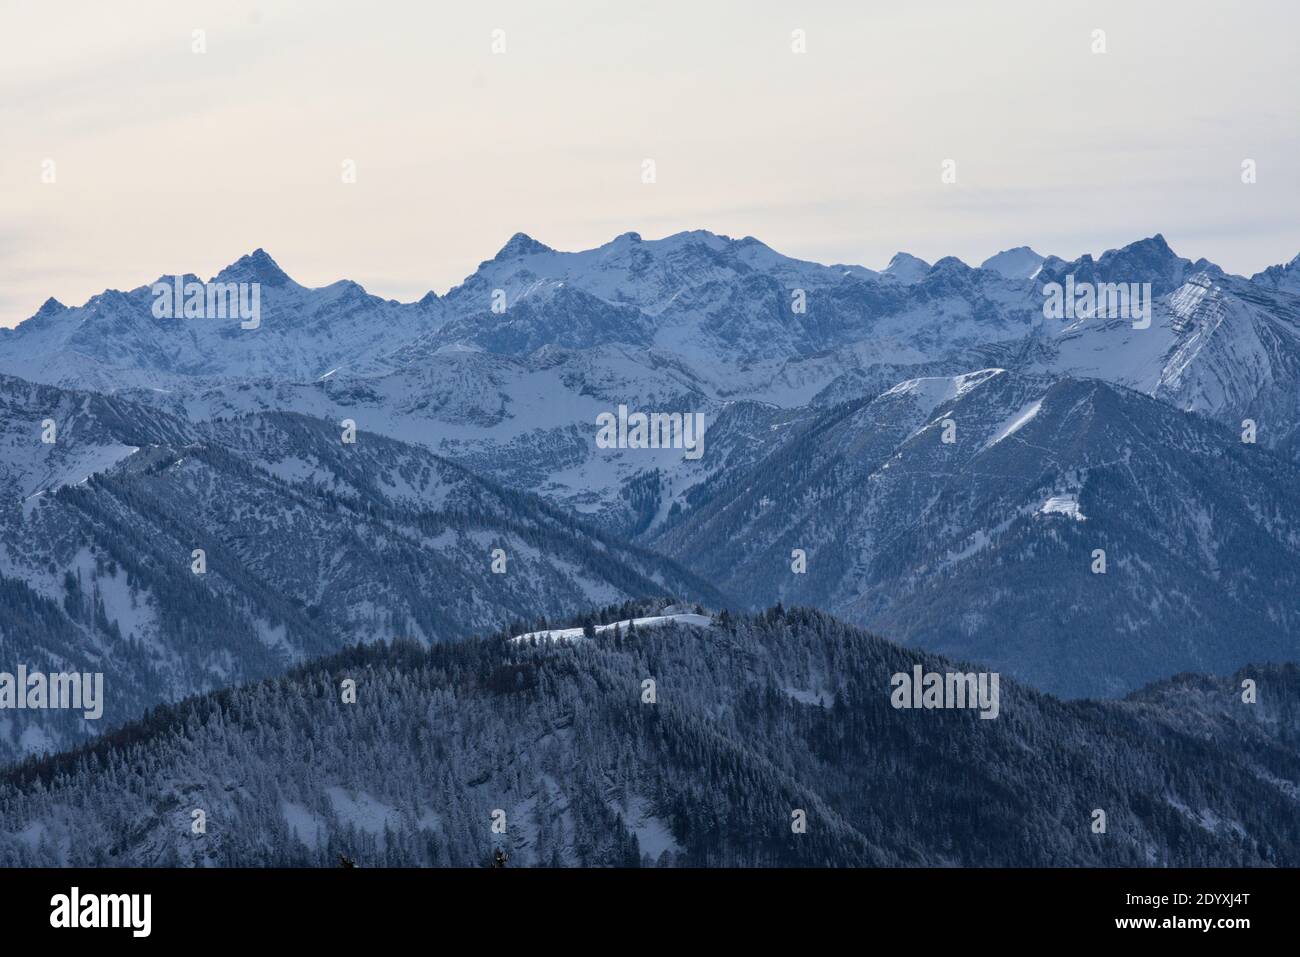 View from the Seekarkreuz peak in the Mangfall mountain range near Lenggries, Bavaria, Germany towards the Karwendel mountain range in the background Stock Photo